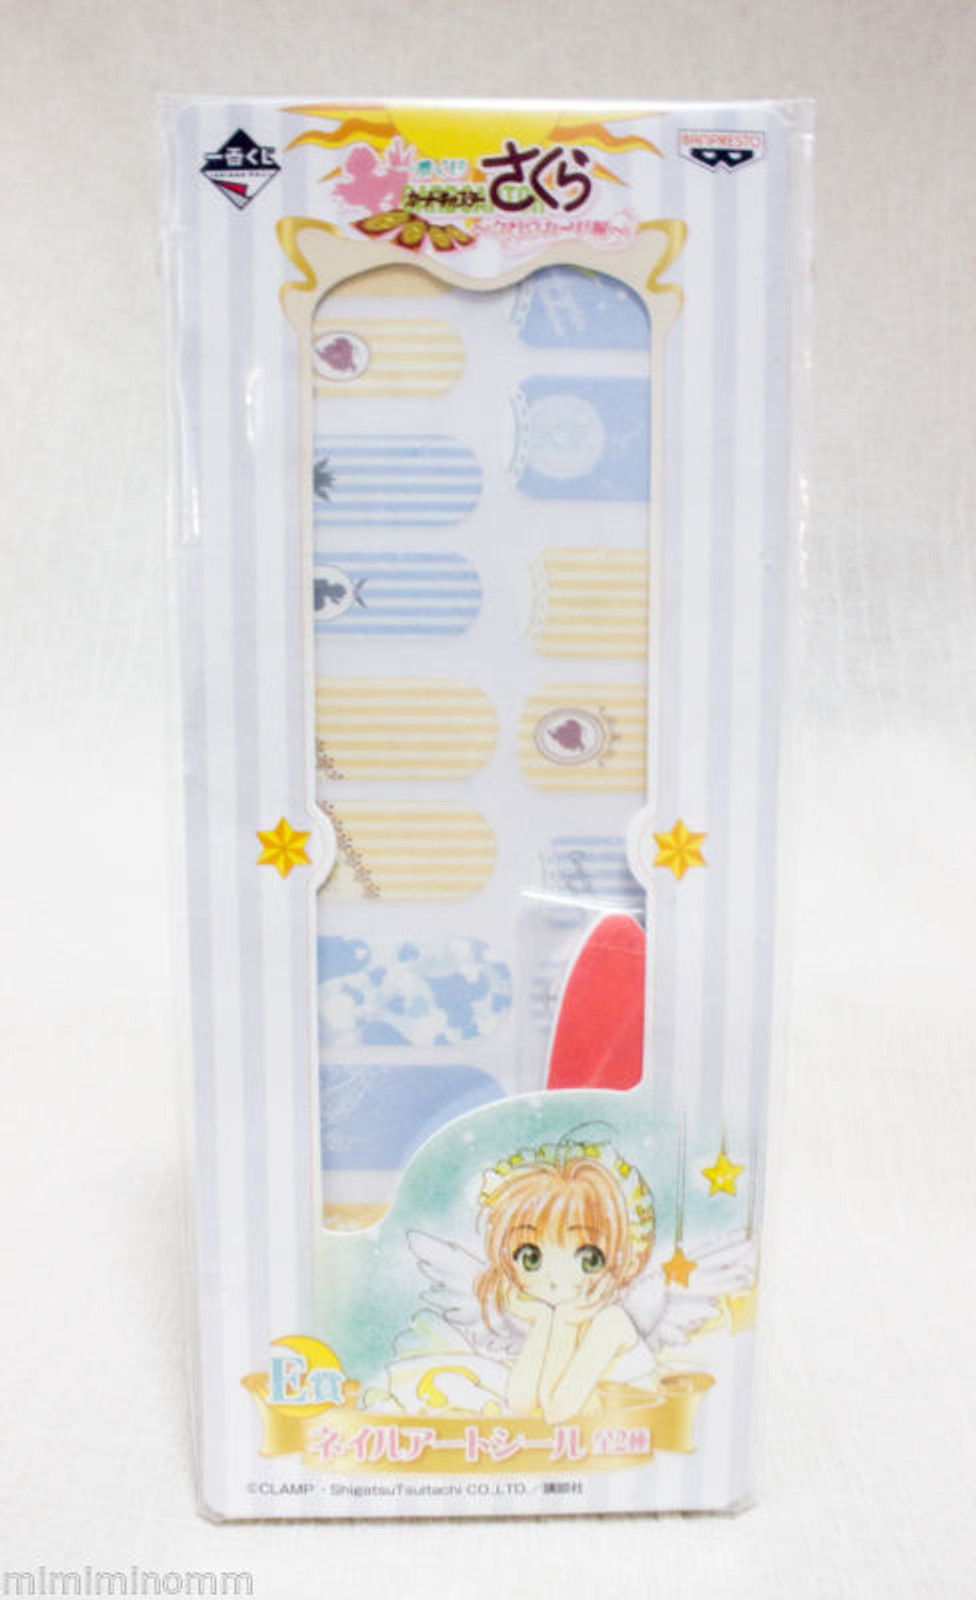 Cardcaptor Sakura Nail Art Sticker Set CLAMP Banpresto JAPAN ANIME MANGA